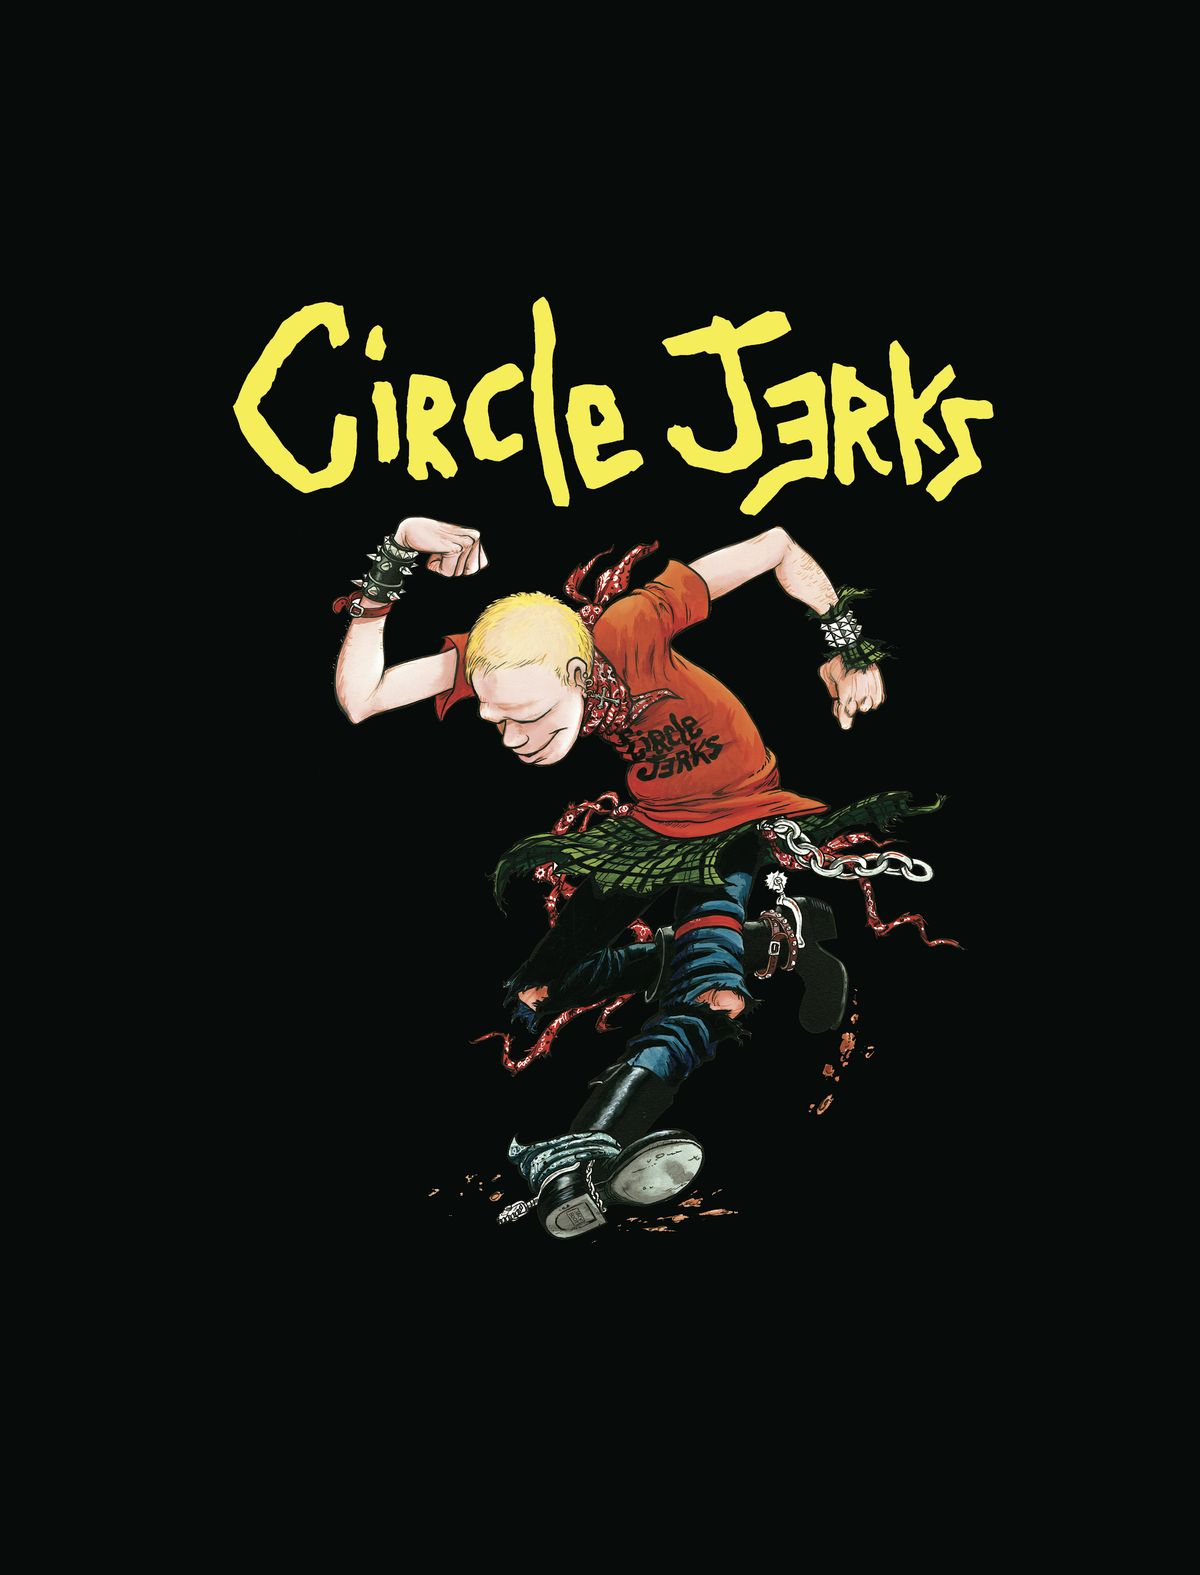 Circle Jerks Live in Halifax